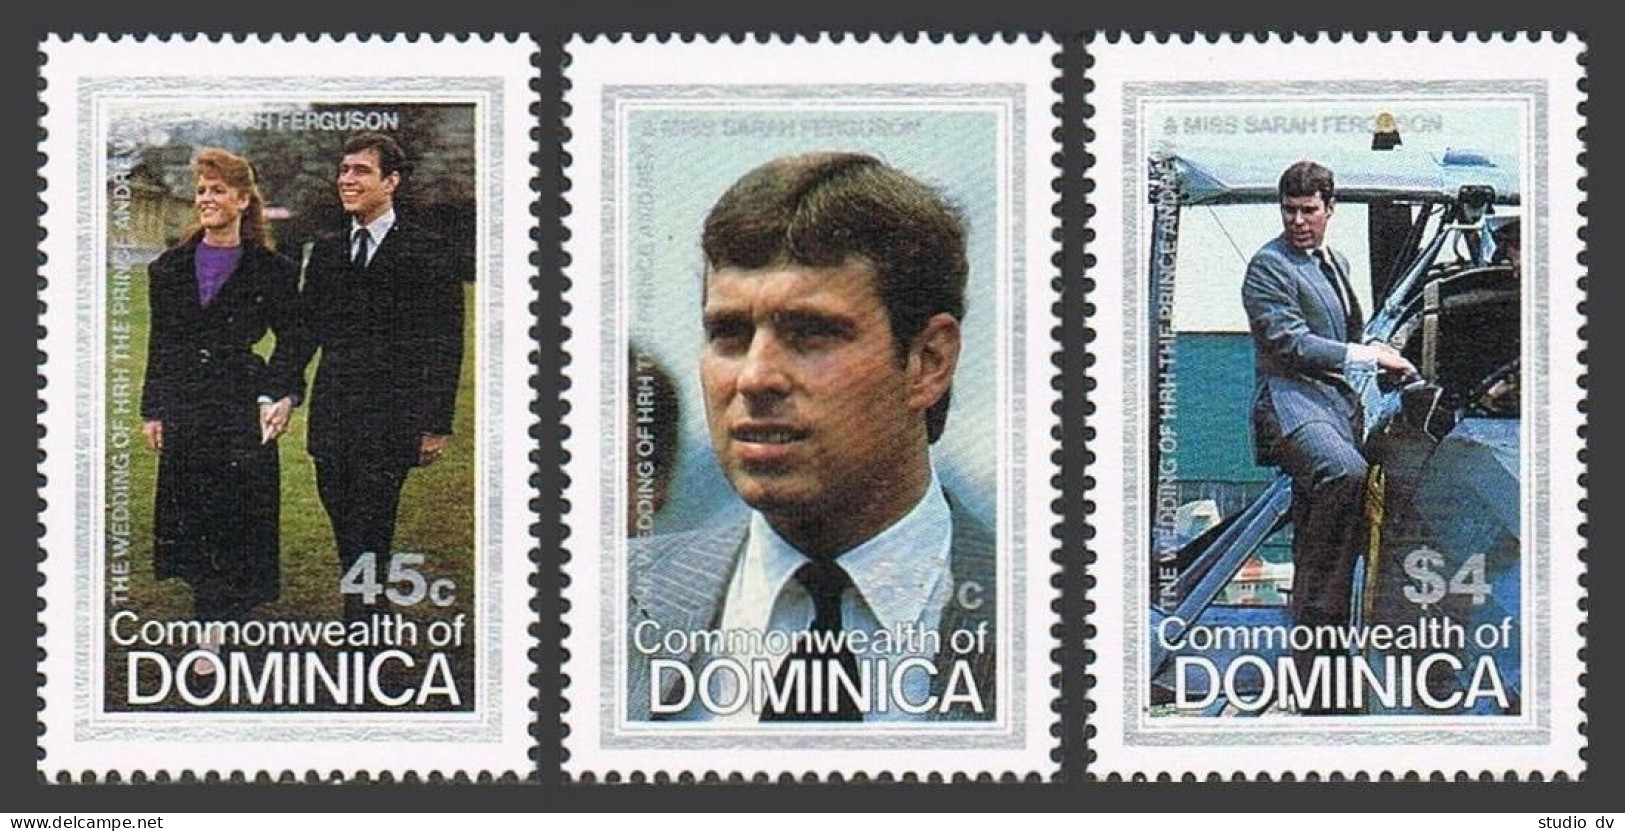 Dominica 970-972,MNH.Michel 984-986. Royal Wedding 1986:Andrew,Sarah Ferguson. - Dominique (1978-...)